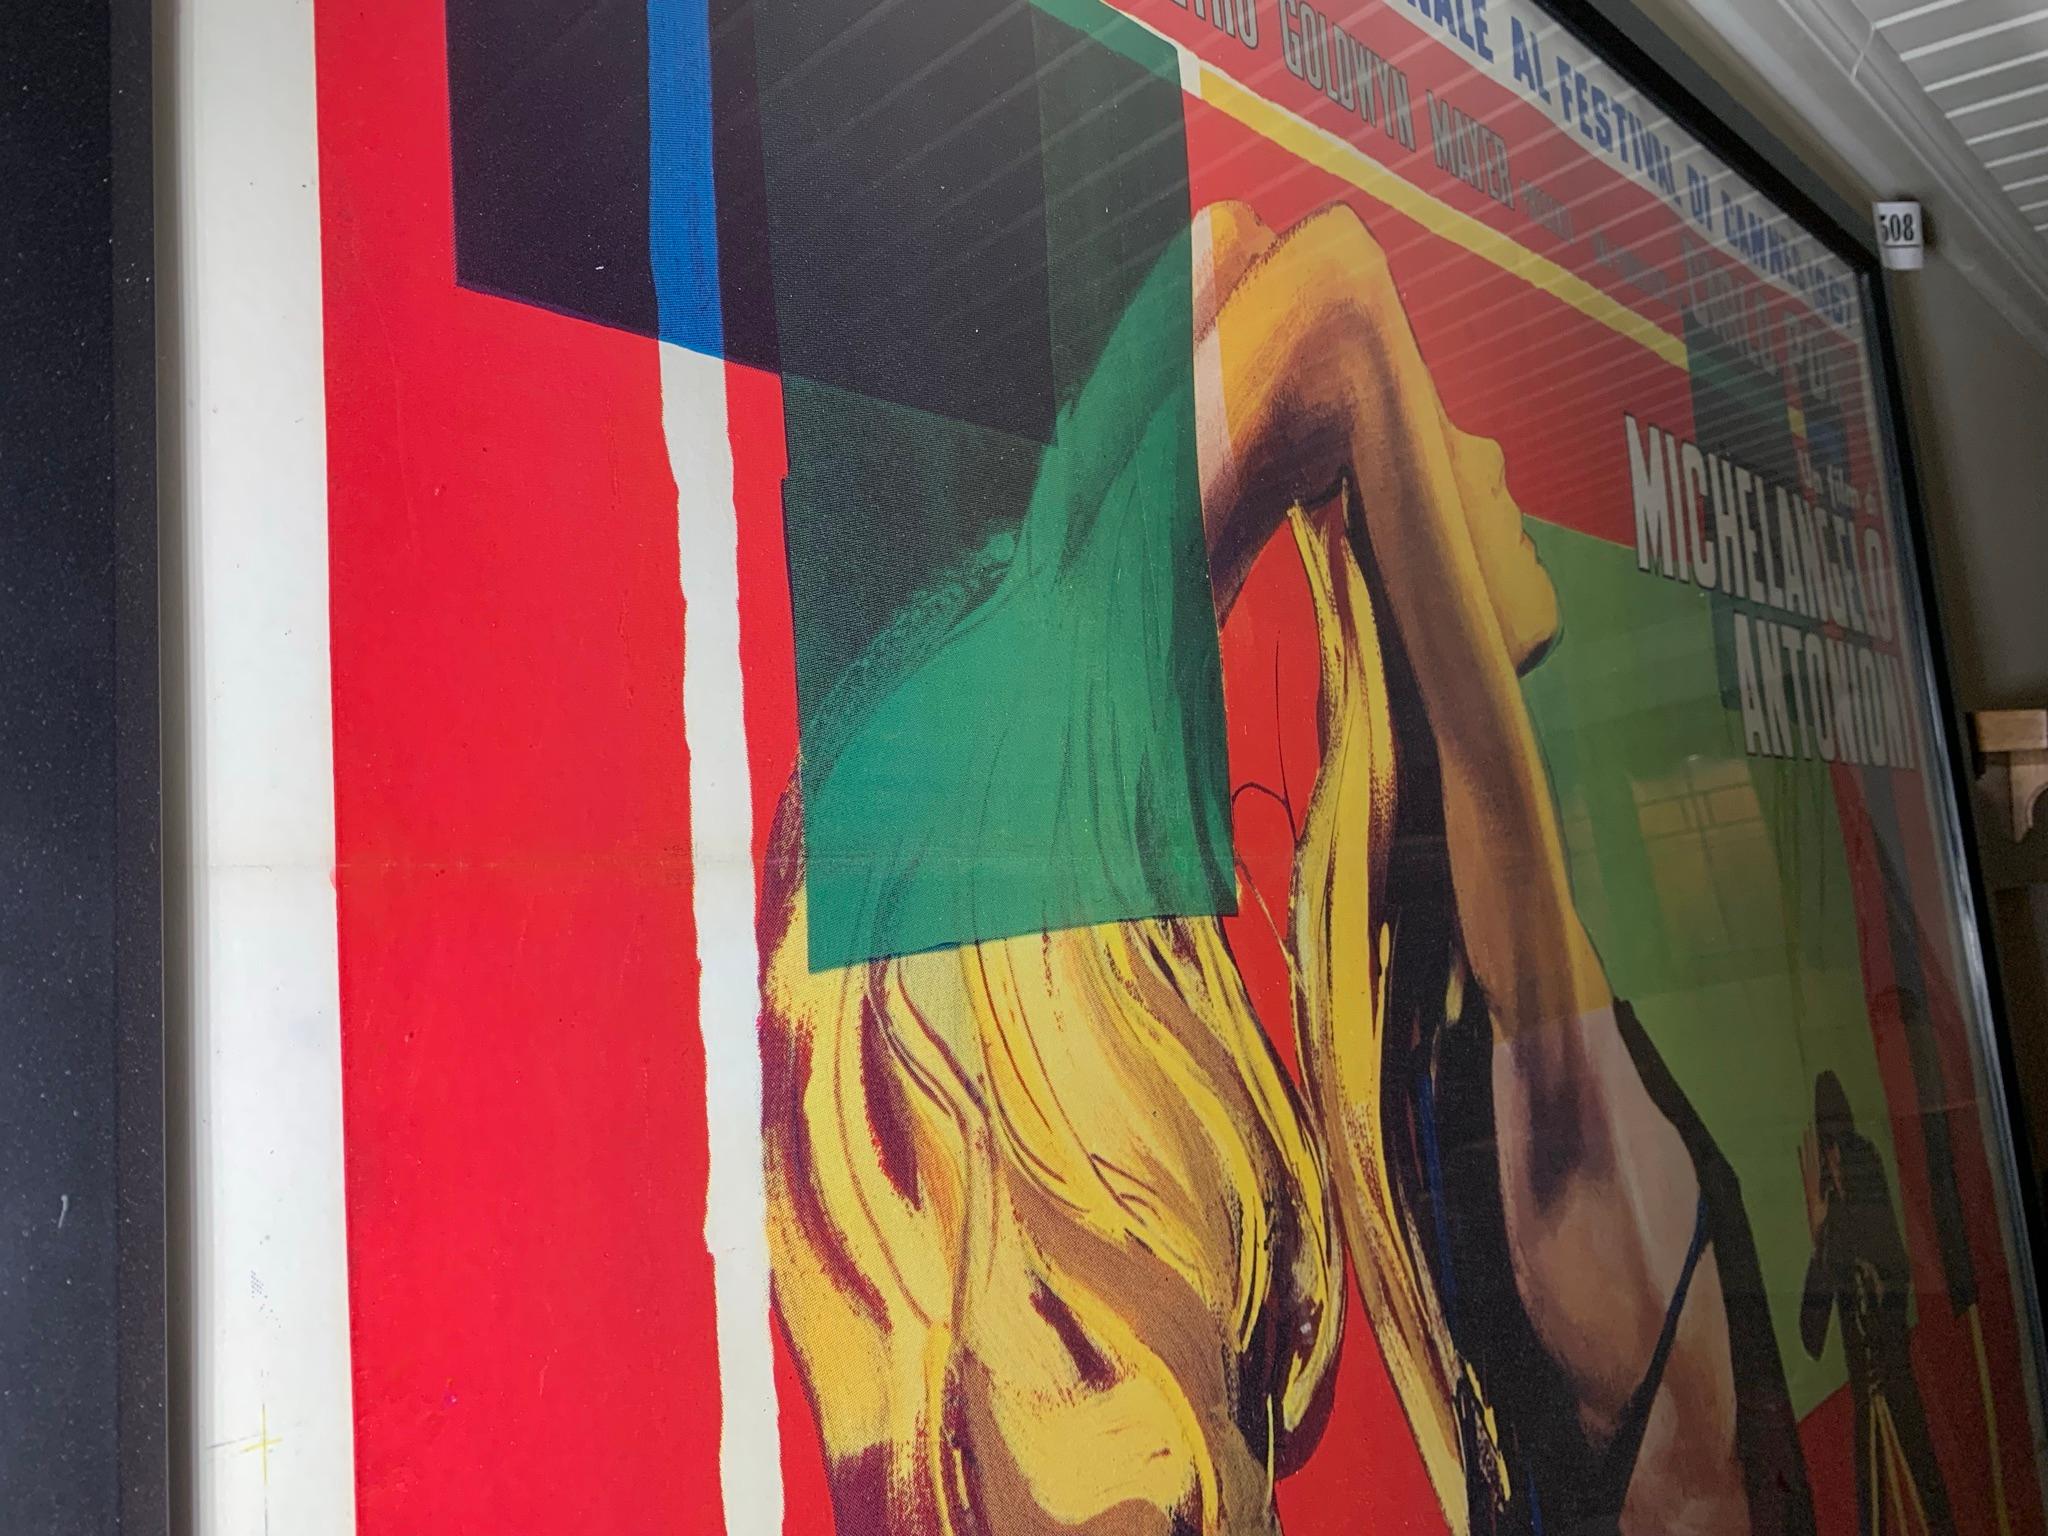 Giant Sized Framed Vintage Movie Poster Vanessa Redgrave Blow-Up